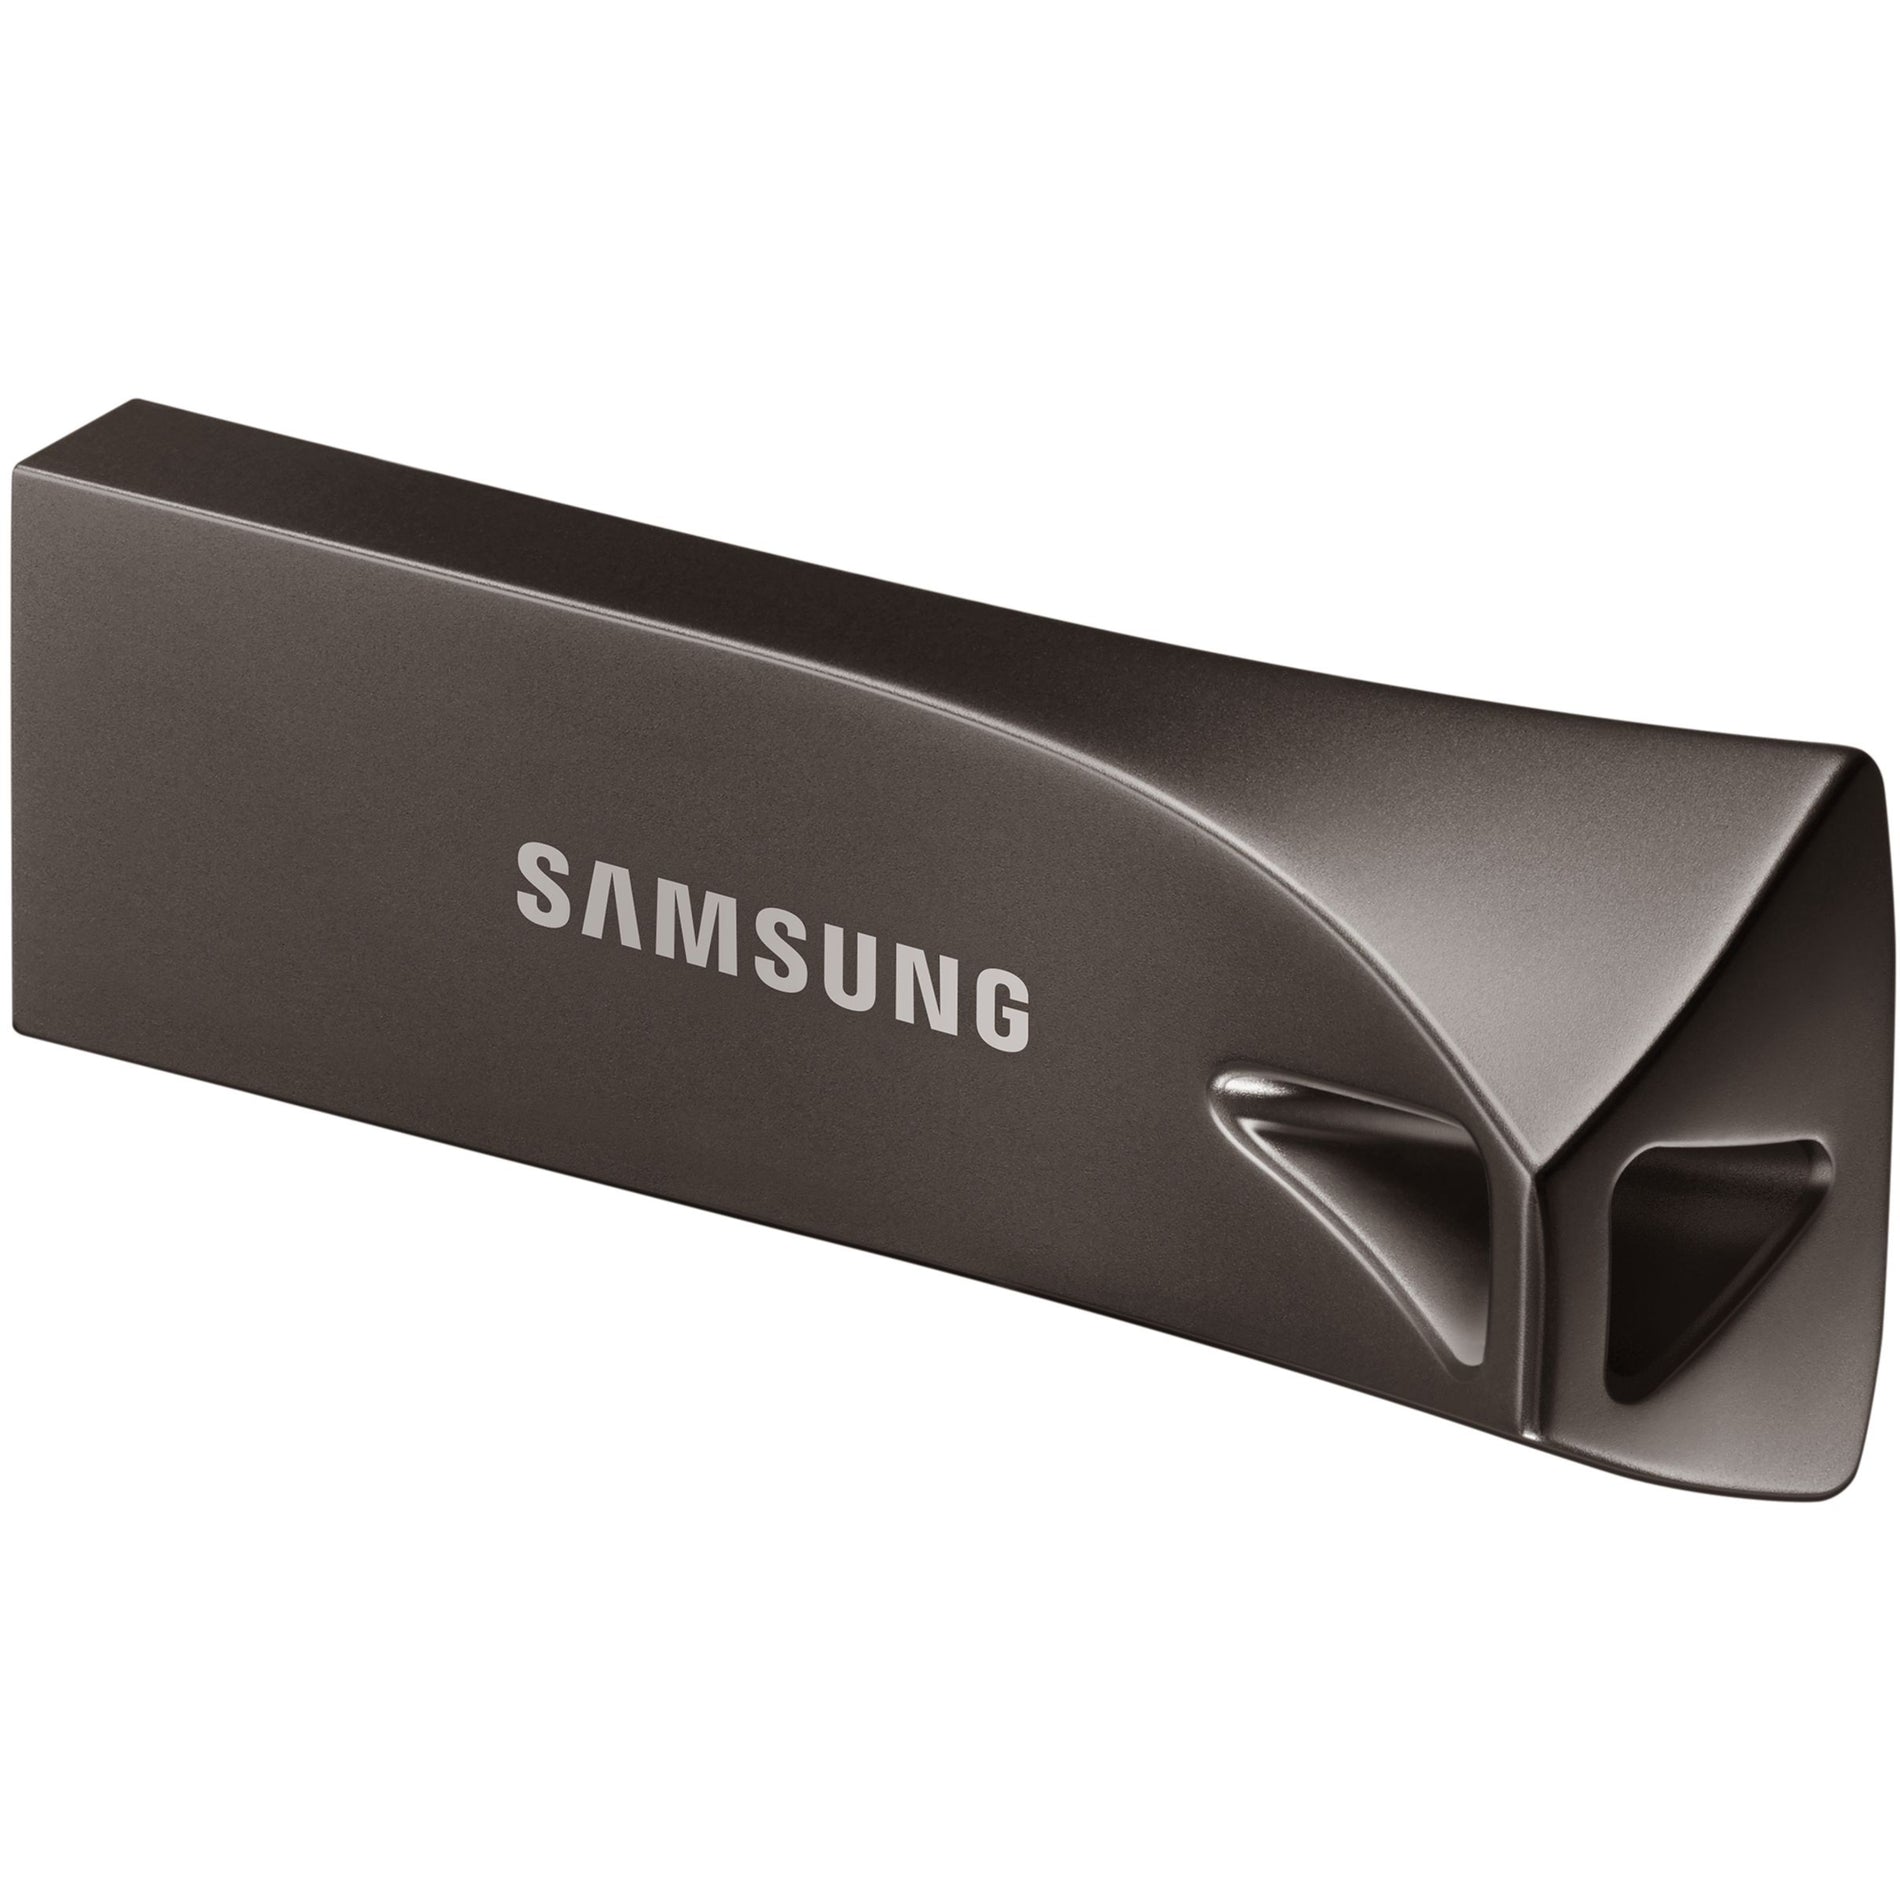 Samsung MUF-256BE4/AM USB 3.1 Flash Drive BAR Plus 256GB Titan Gray 5 Year Warranty